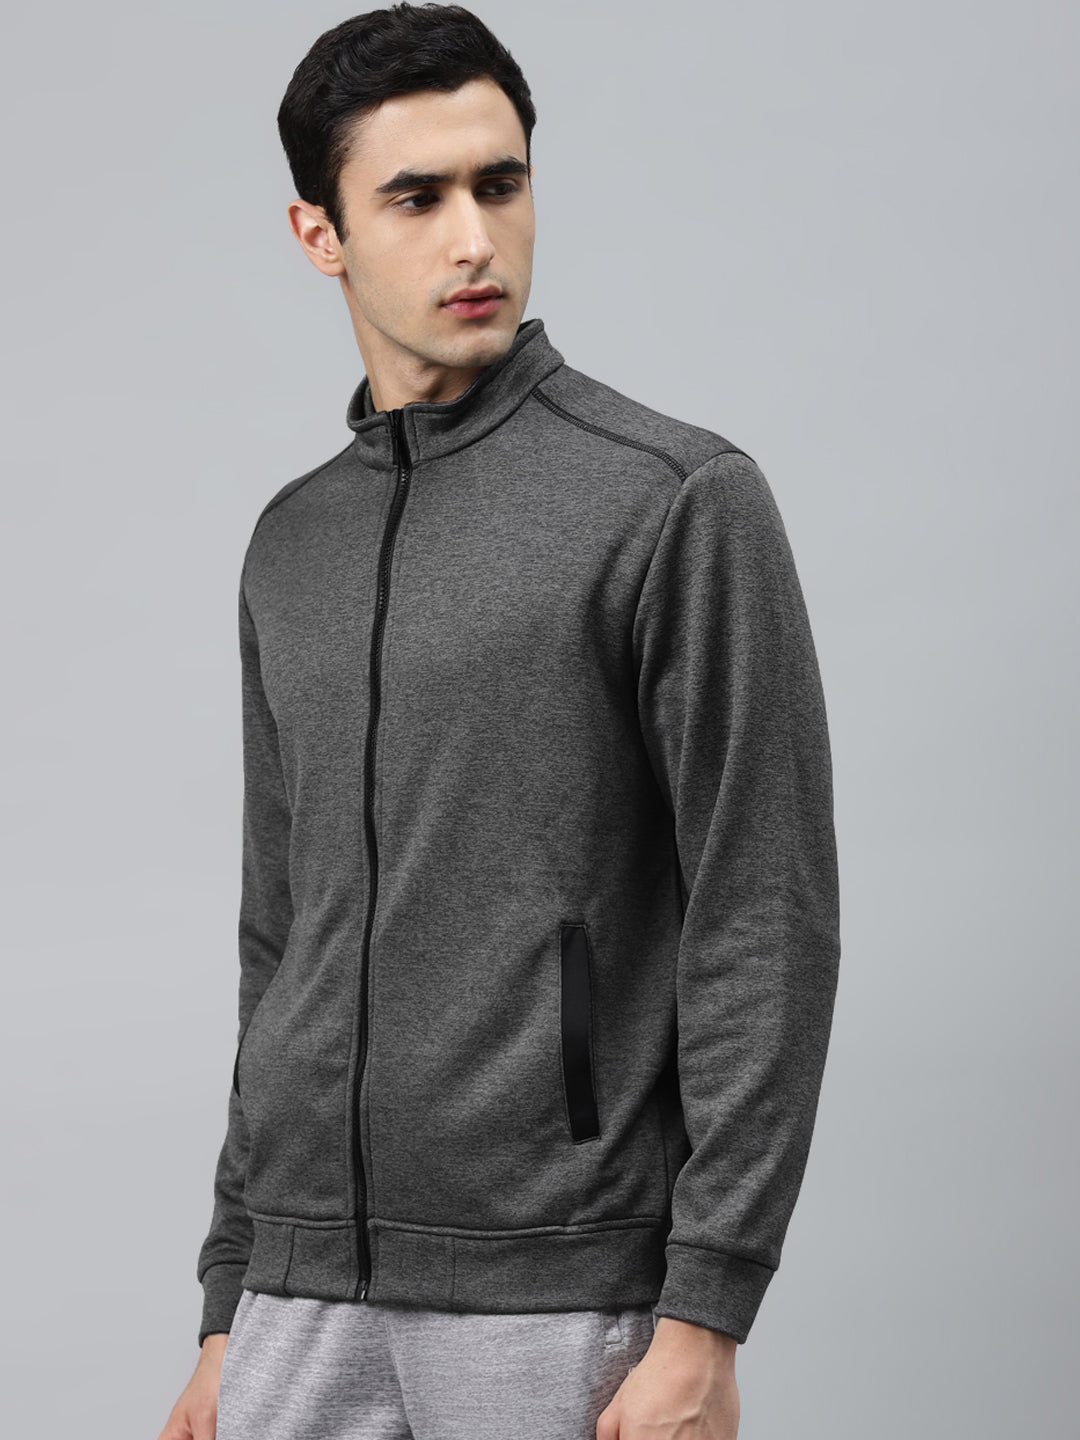 Alcis Men Charcoal Grey Solid Sporty Jacket